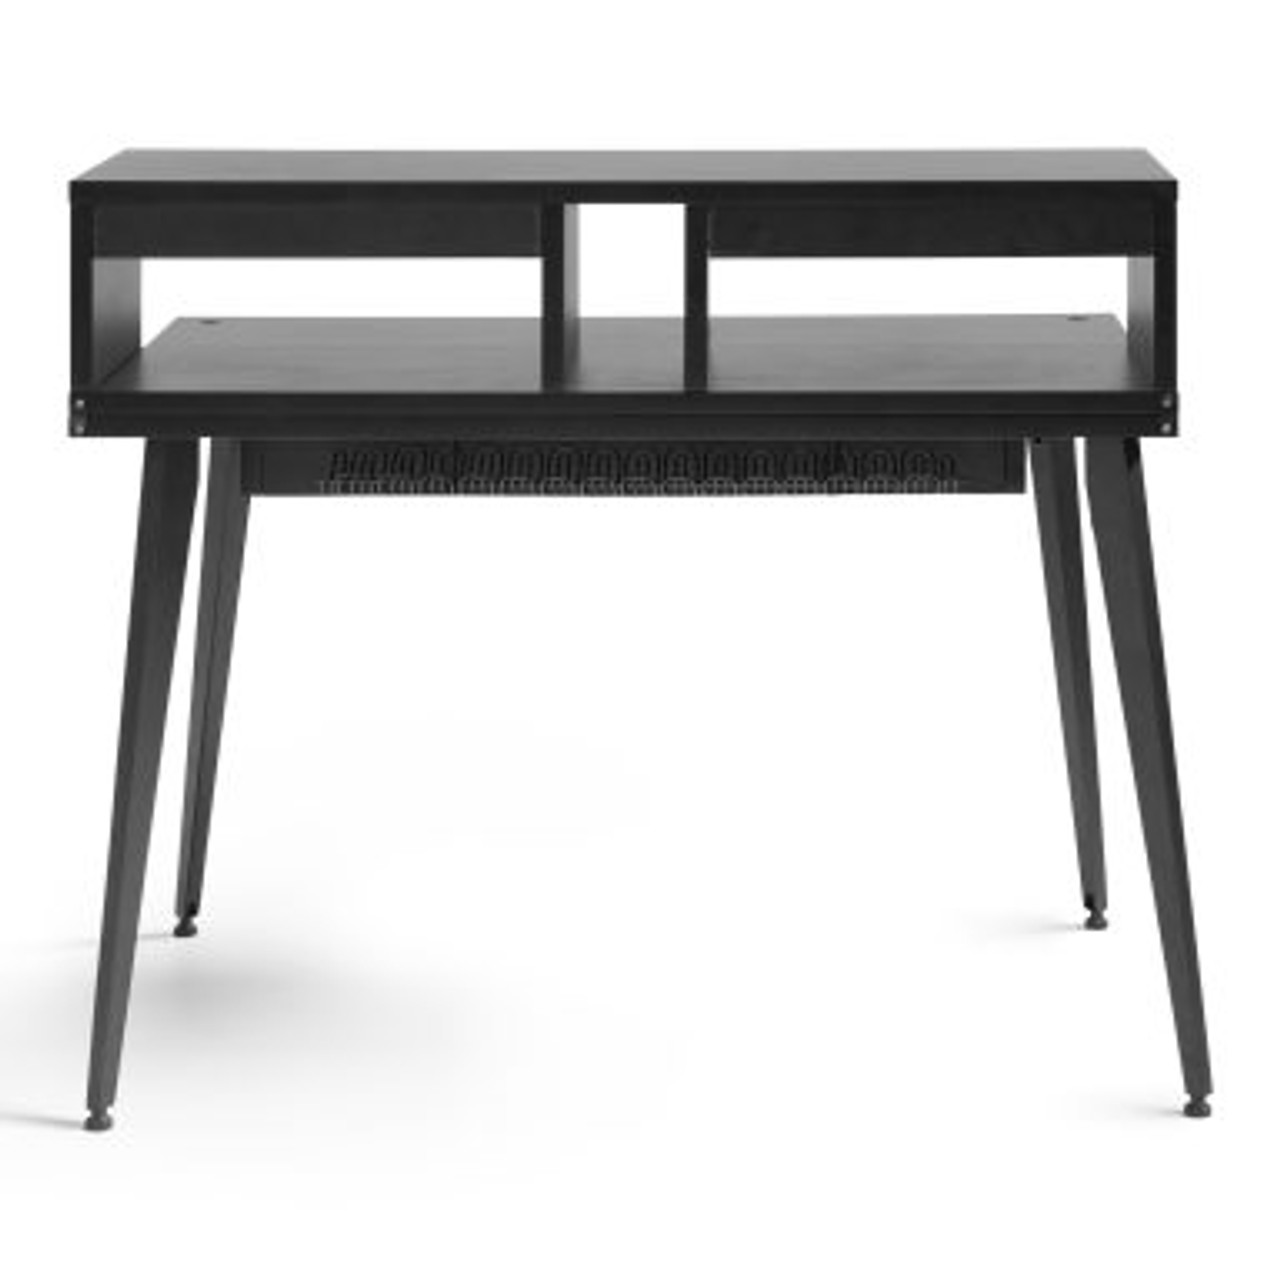 Gator GFW-ELITEDESK-BLK Elite Furniture Series Main Desk In Black Finish